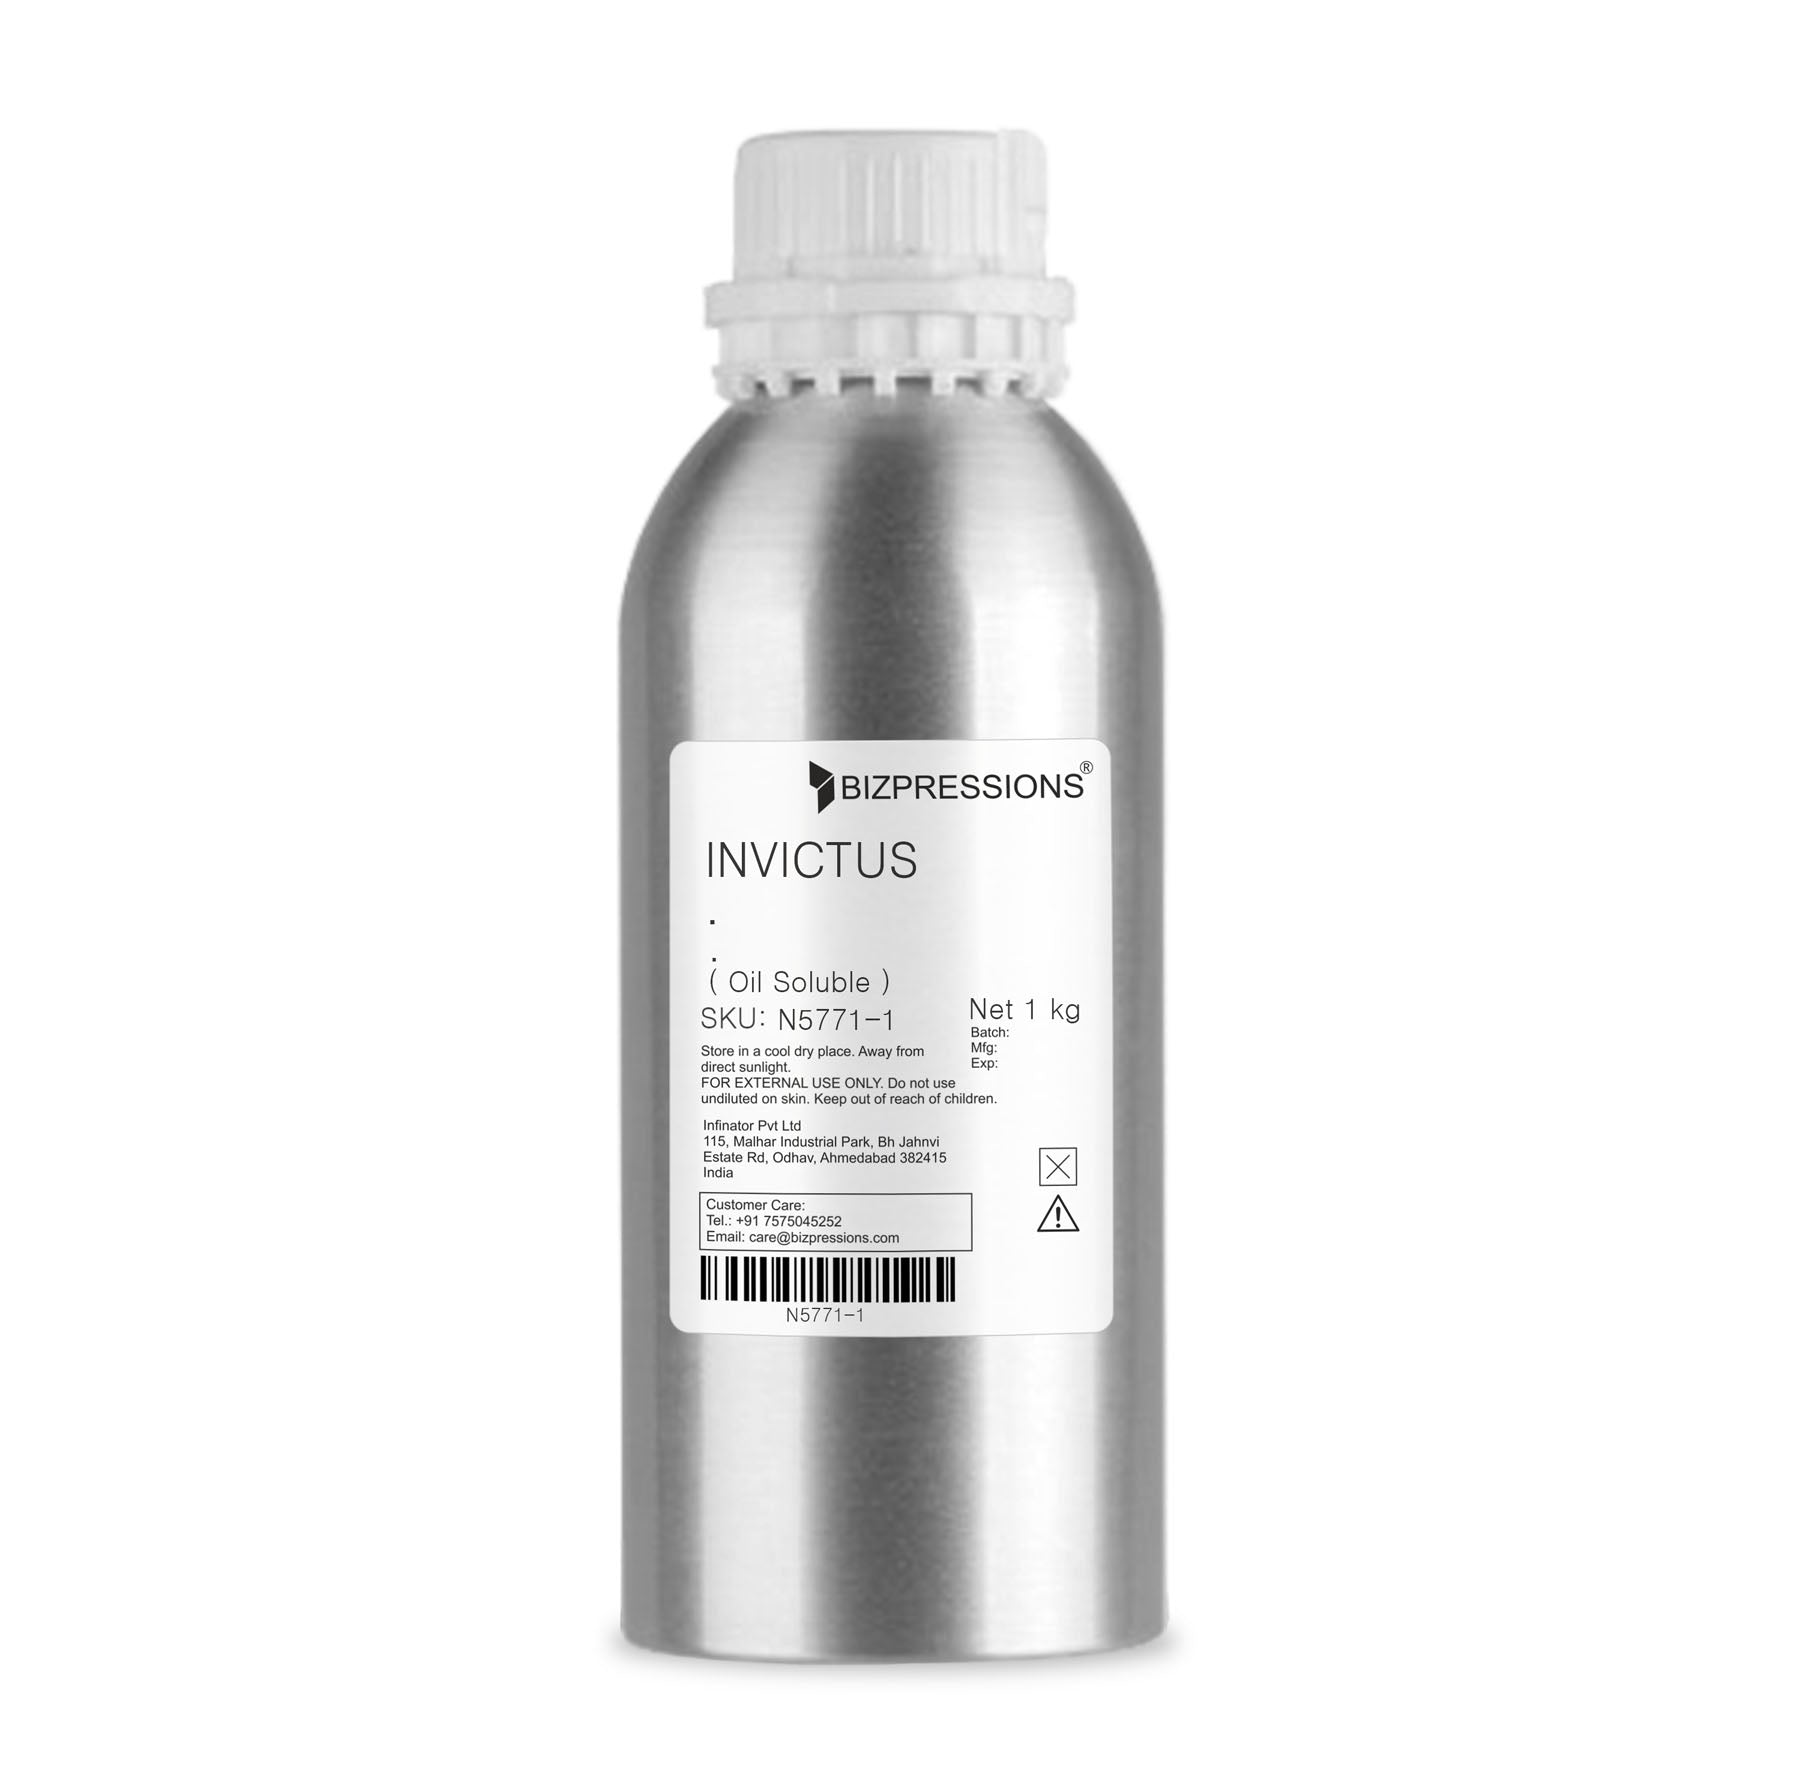 INVICTUS - Fragrance ( Oil Soluble ) - 1 kg